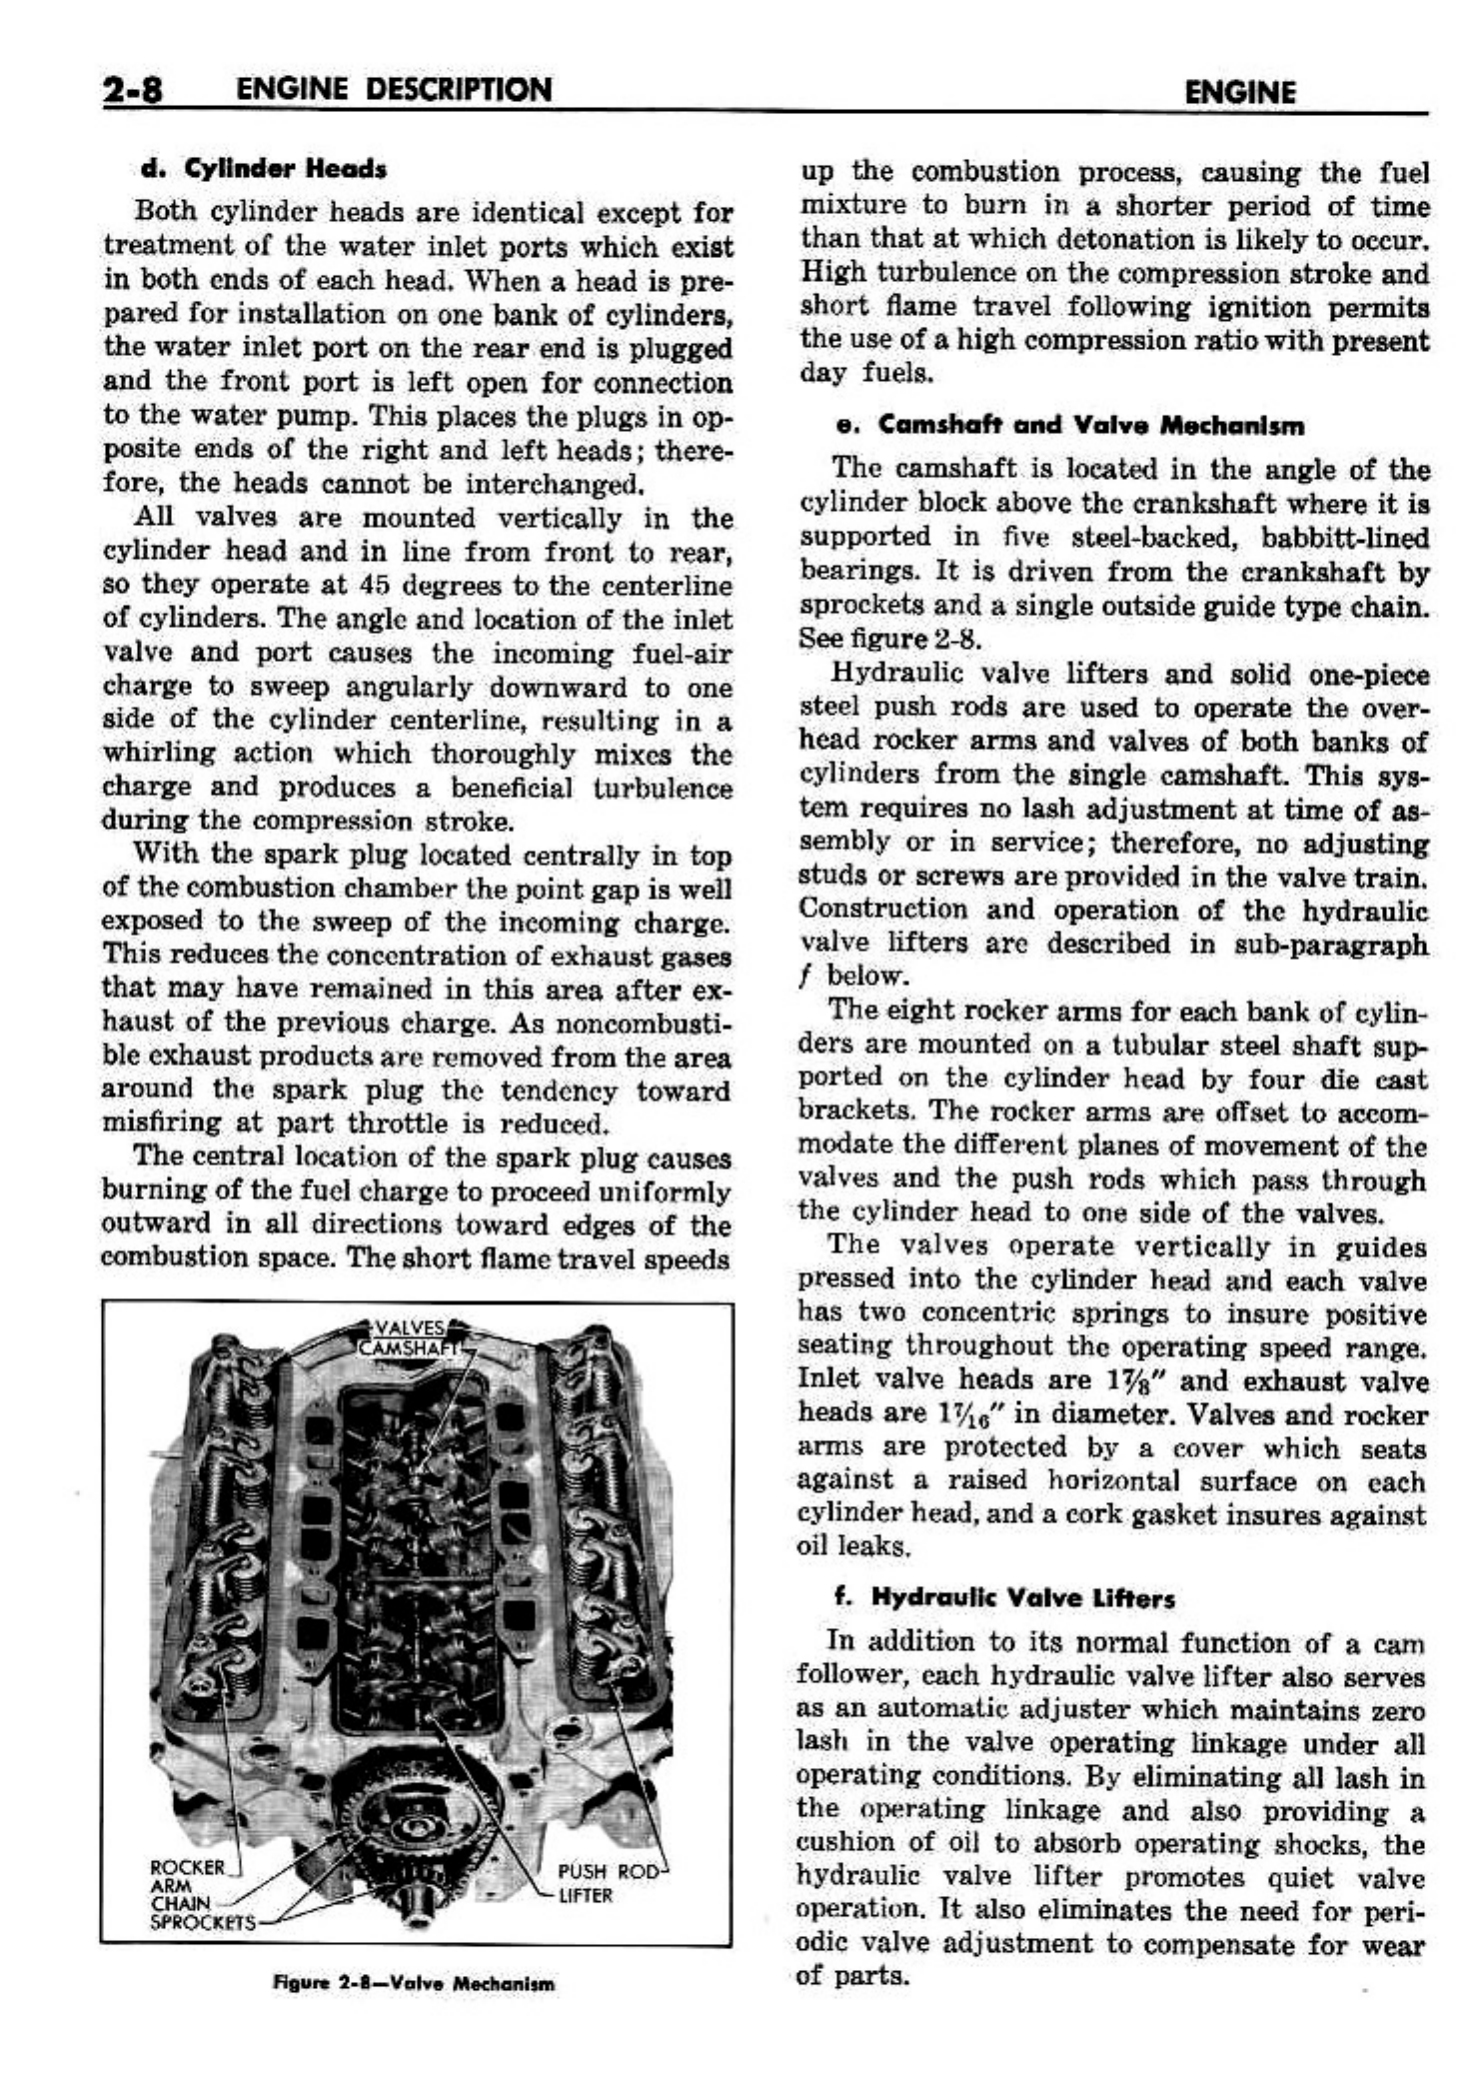 n_03 1958 Buick Shop Manual - Engine_8.jpg